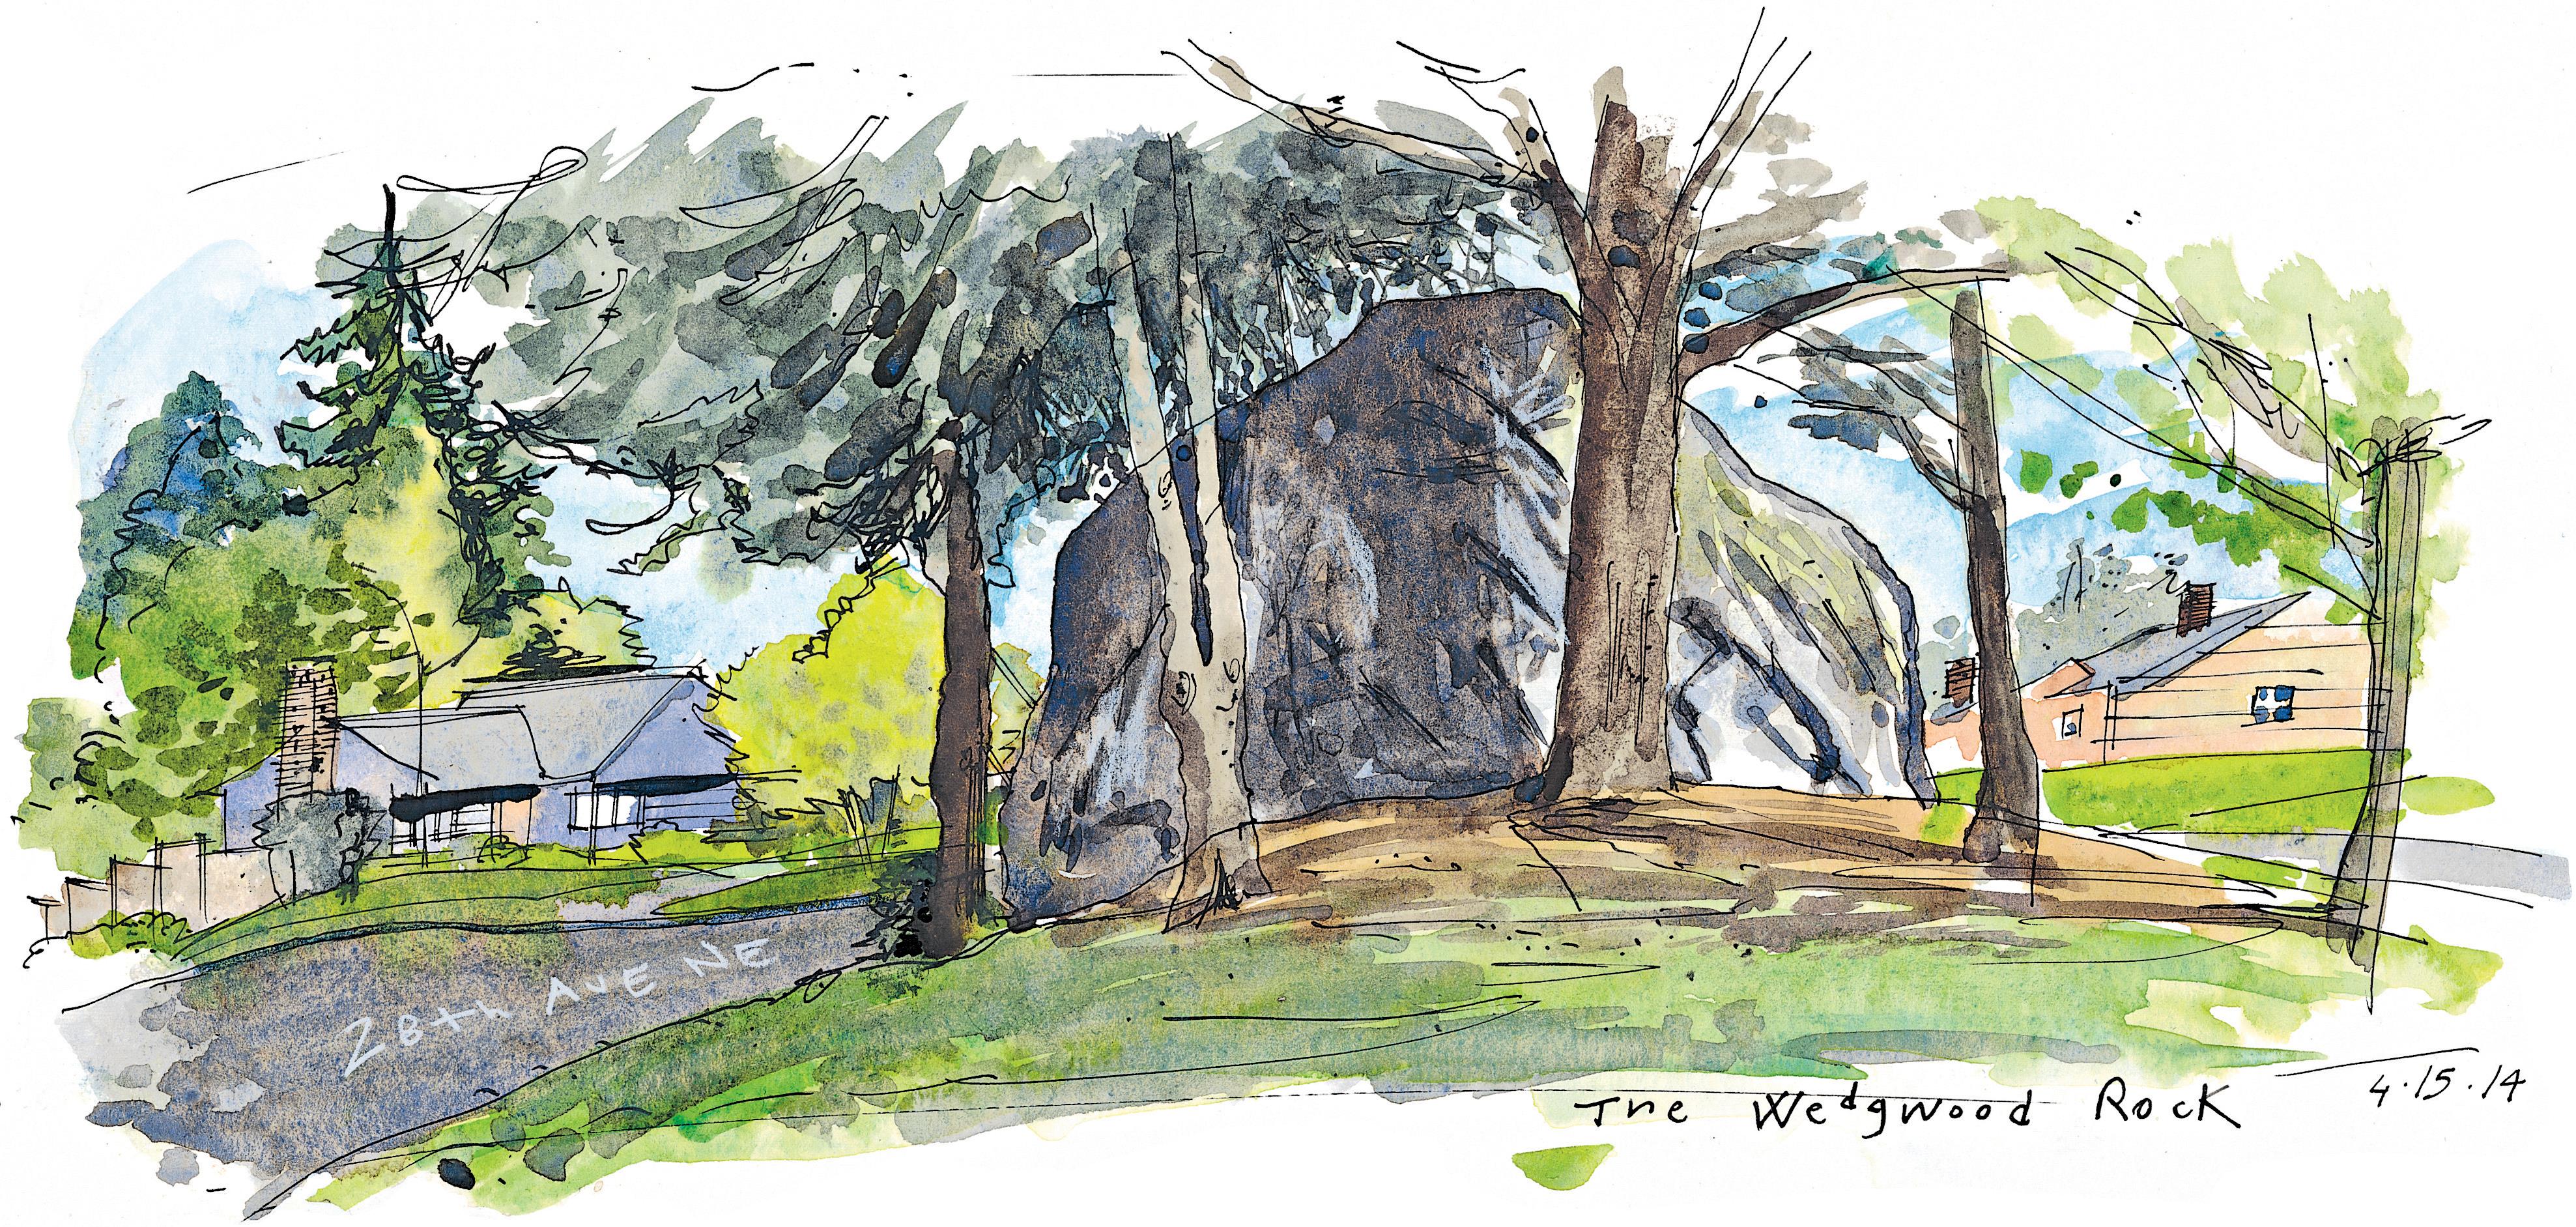 Wedgewood Rock - sketch by Seattle Times